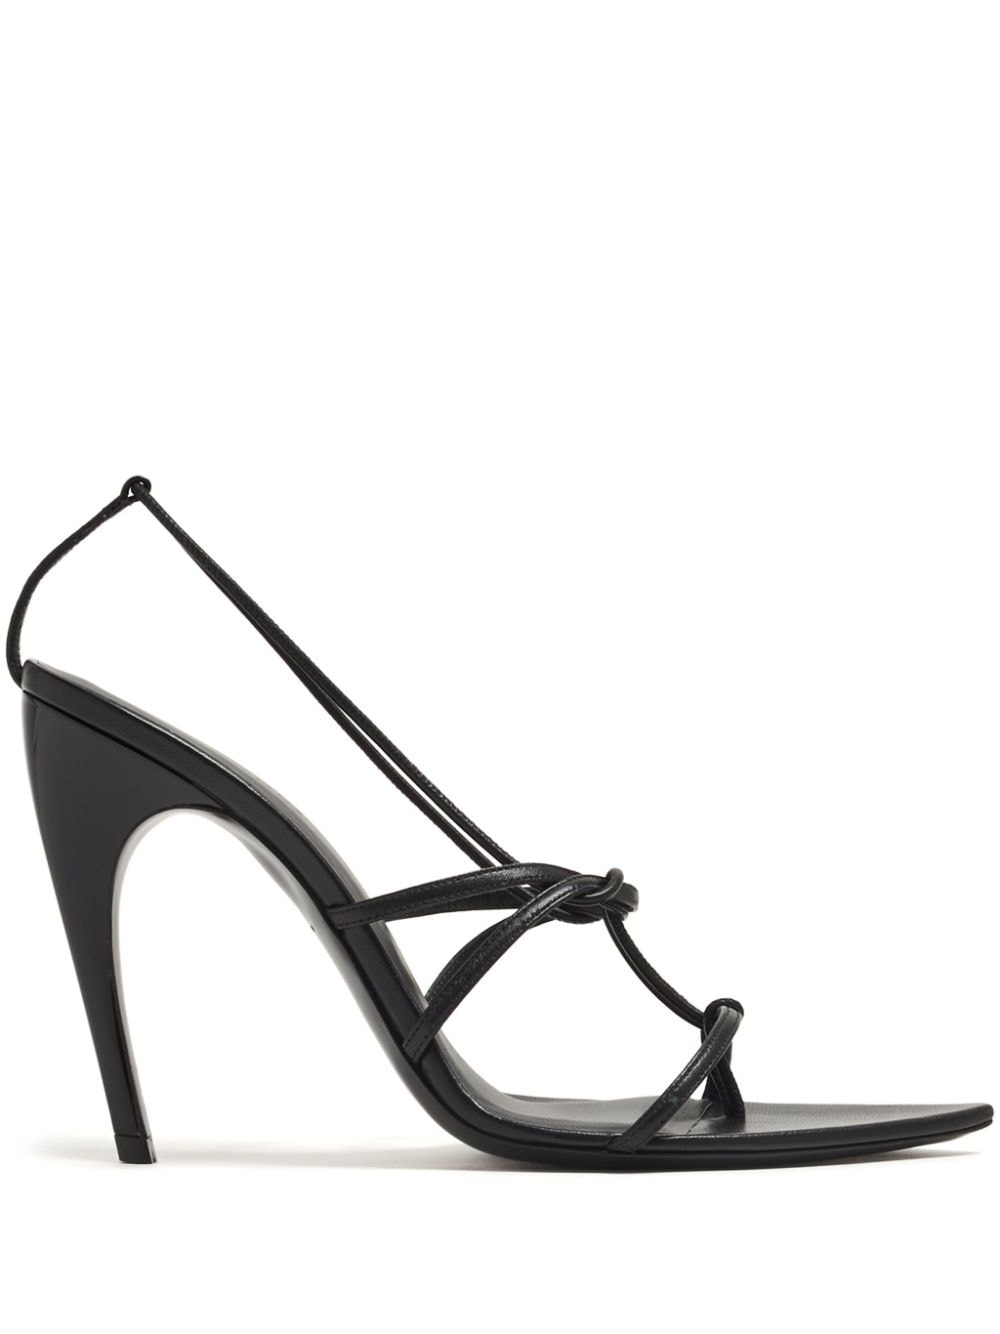 Nensi Dojaka pointed-toe leather sandals - Schwarz